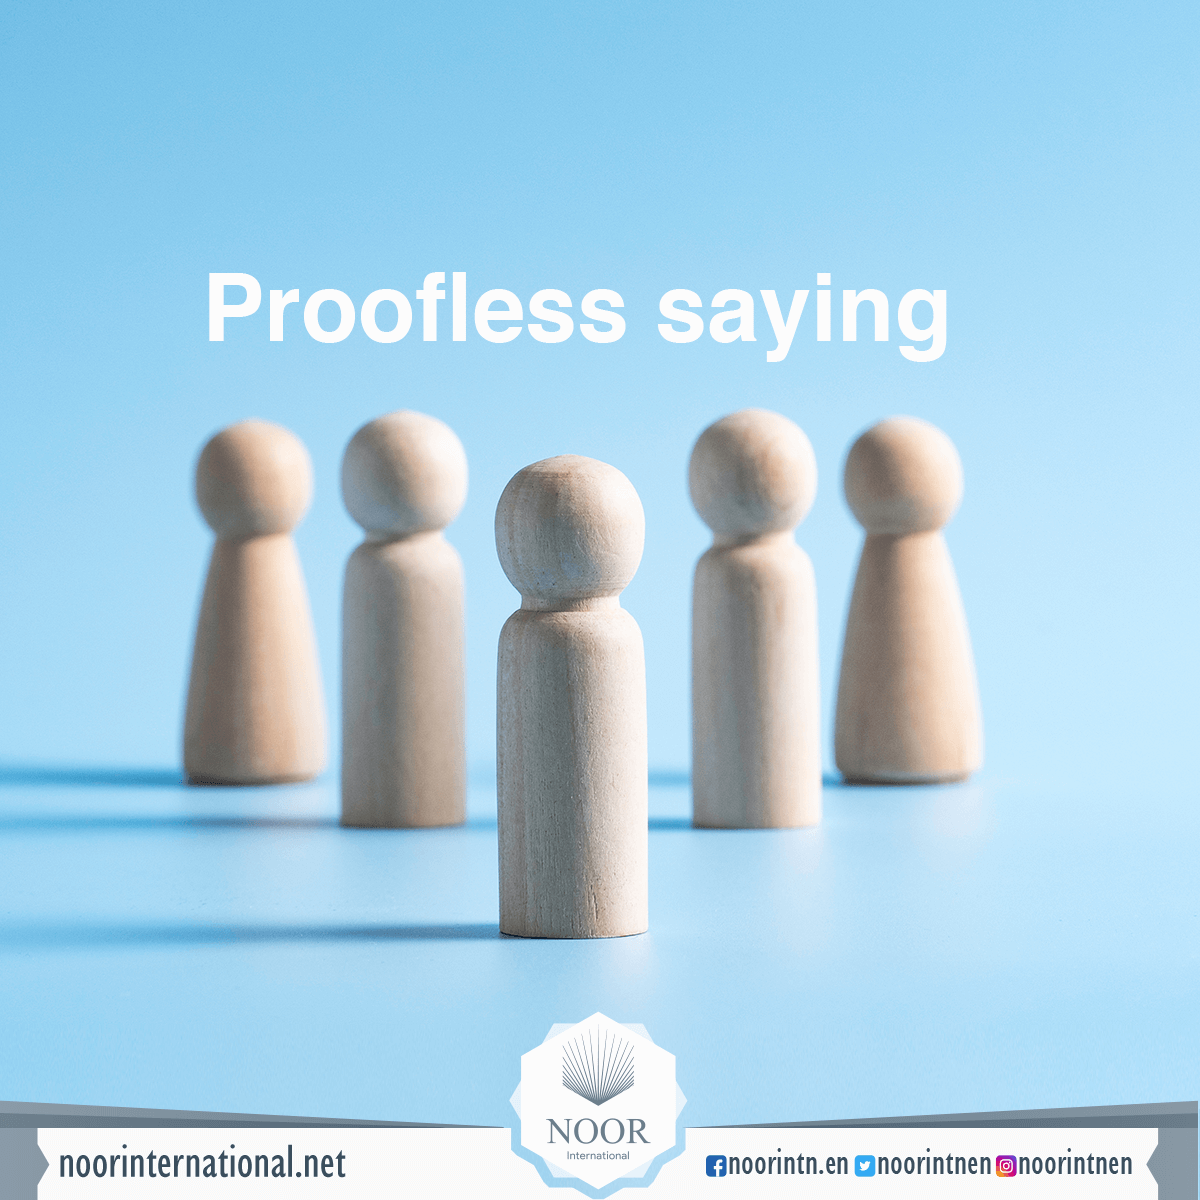 Proofless saying